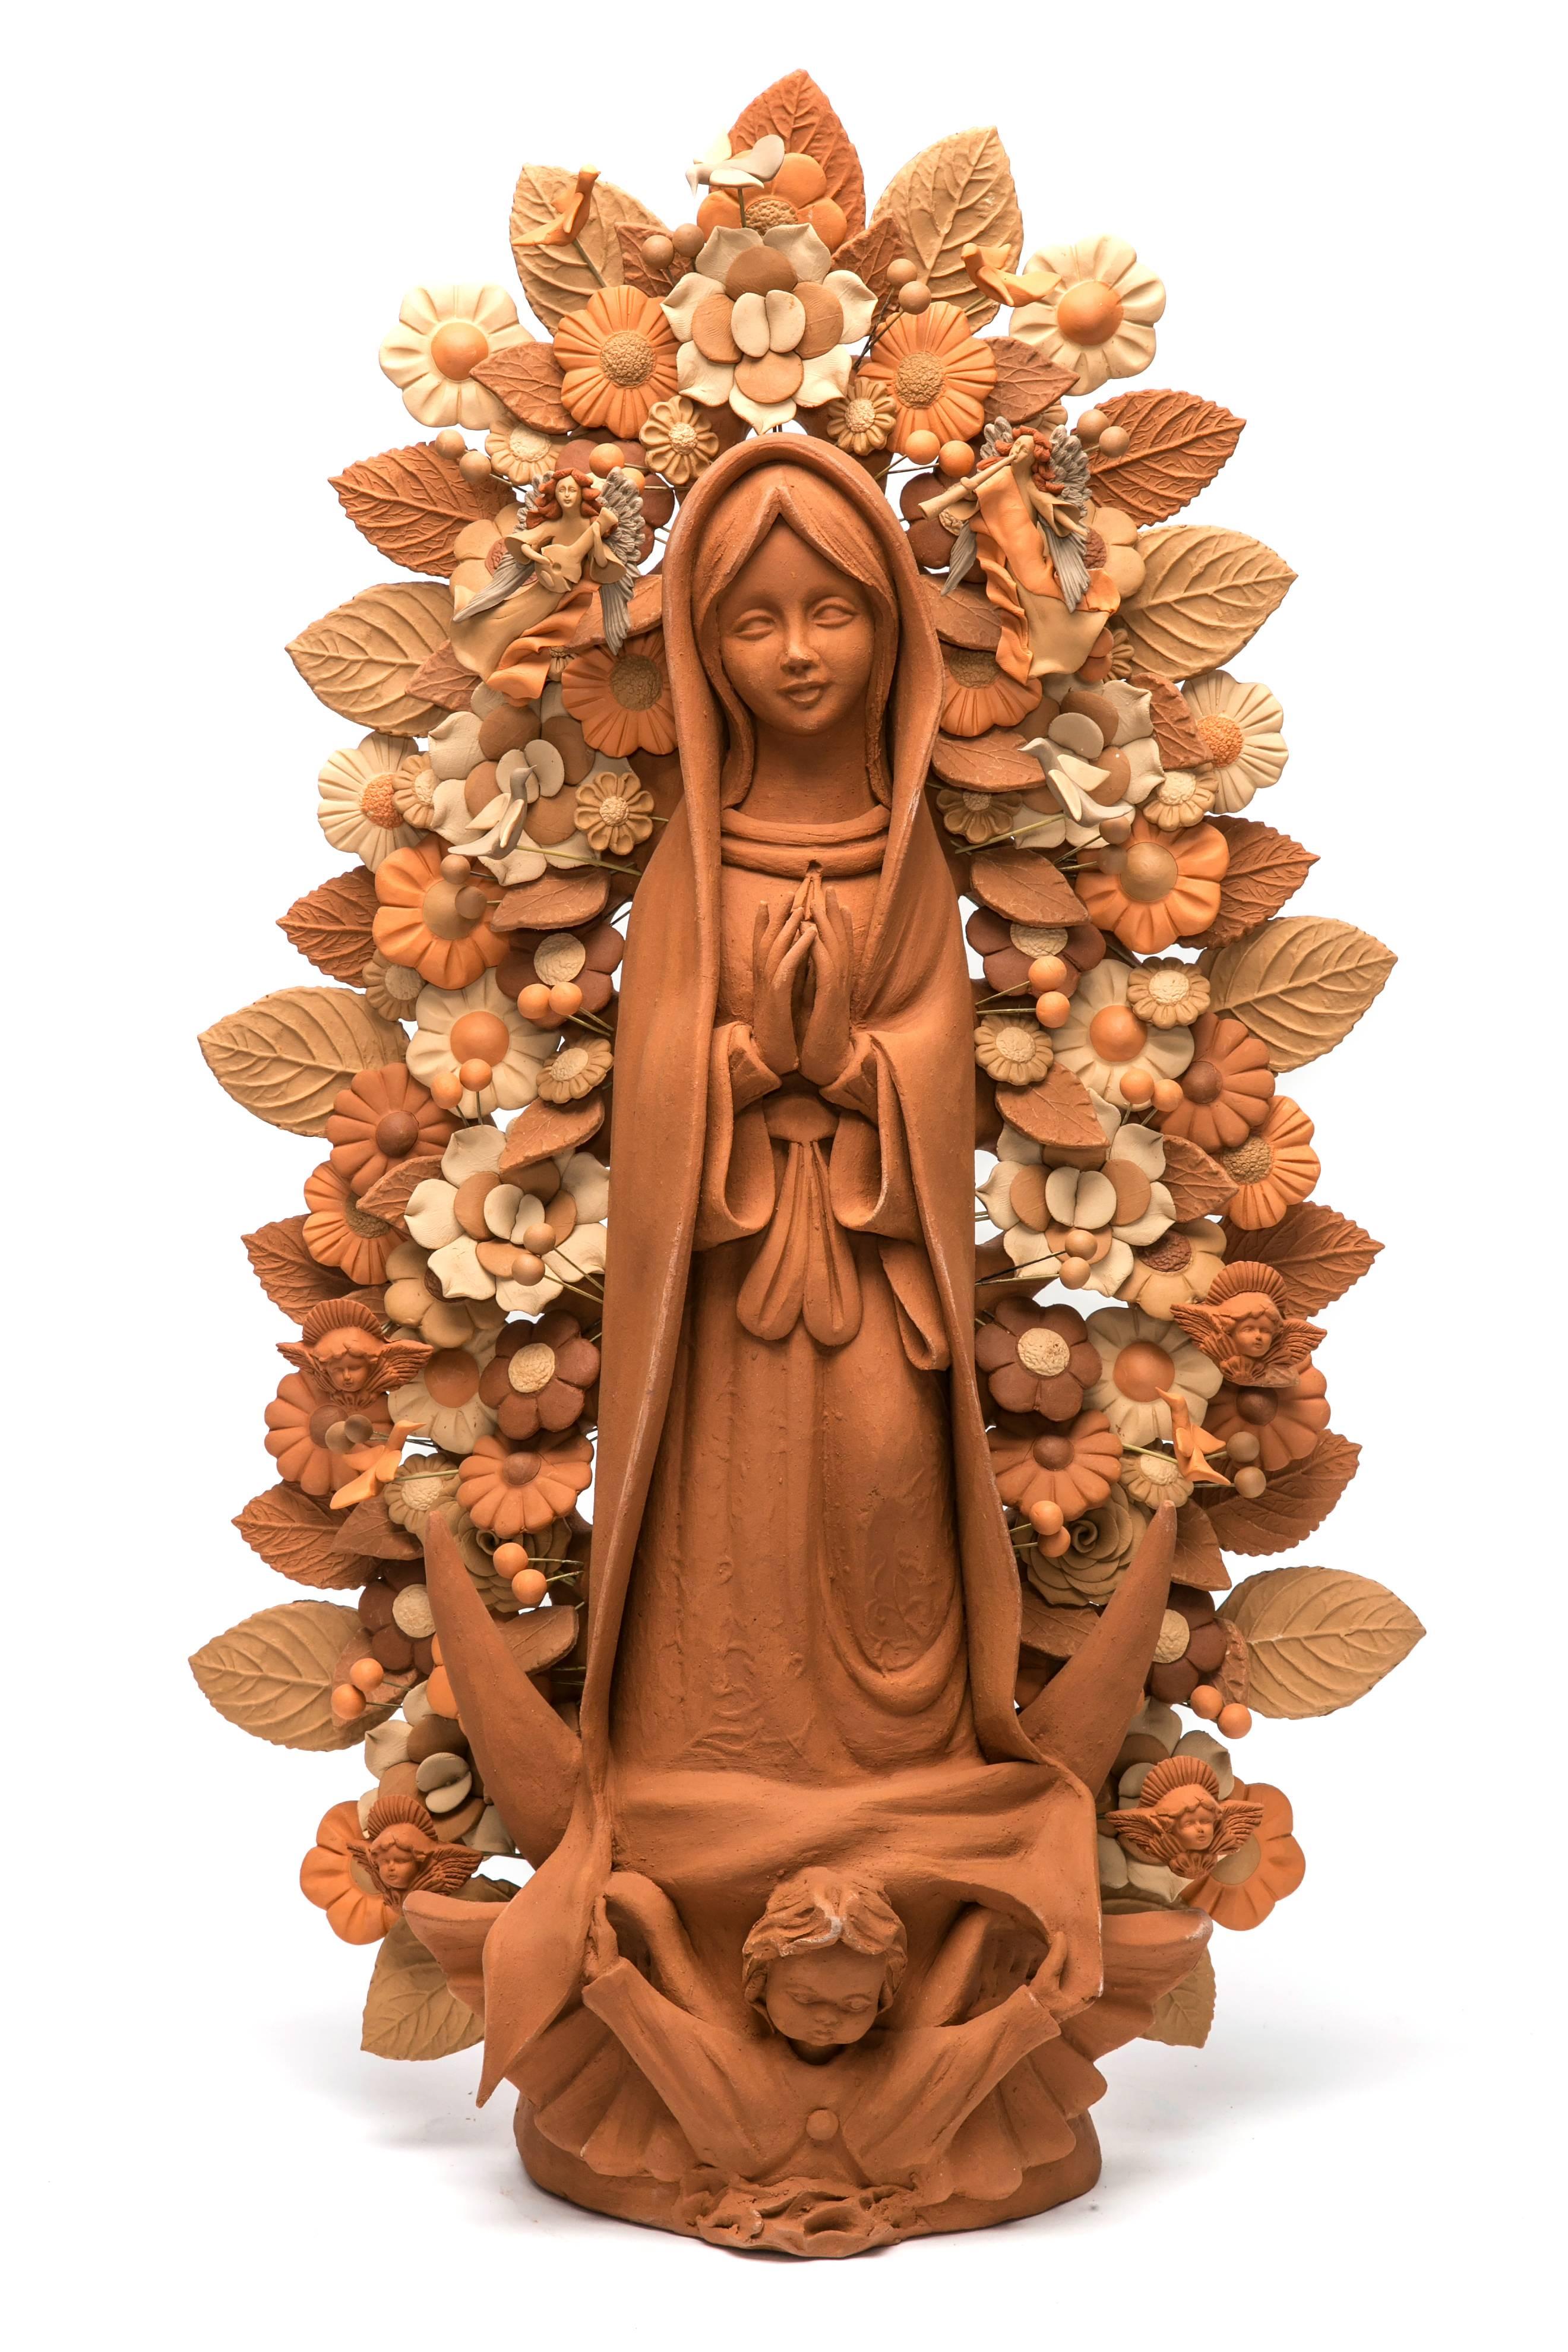 Cecilio Sanchez Fierro Figurative Sculpture - Virgen de Guadalupe / Ceramics Mexican Folk Art Clay